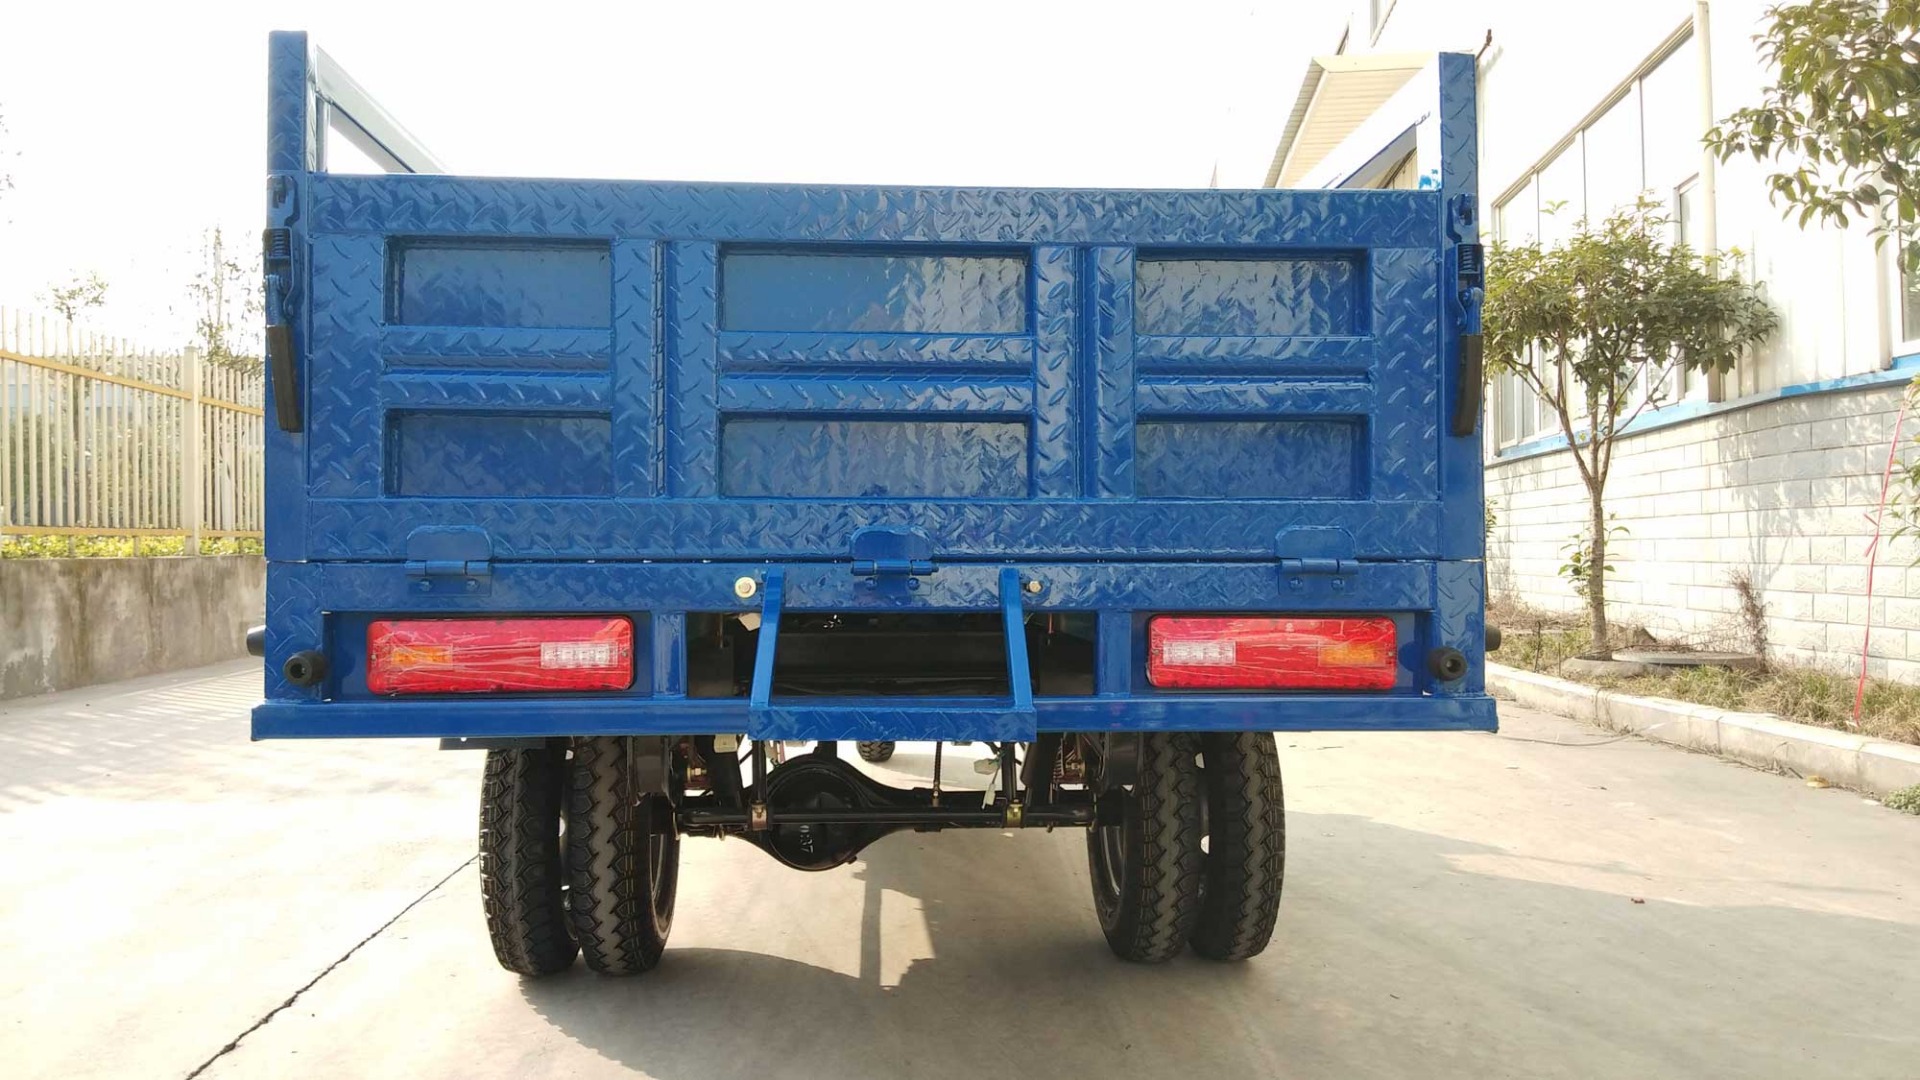 New Export Popular style Model Adult Petrol Type250cc heavy cargo capacity motor cargo tricycle